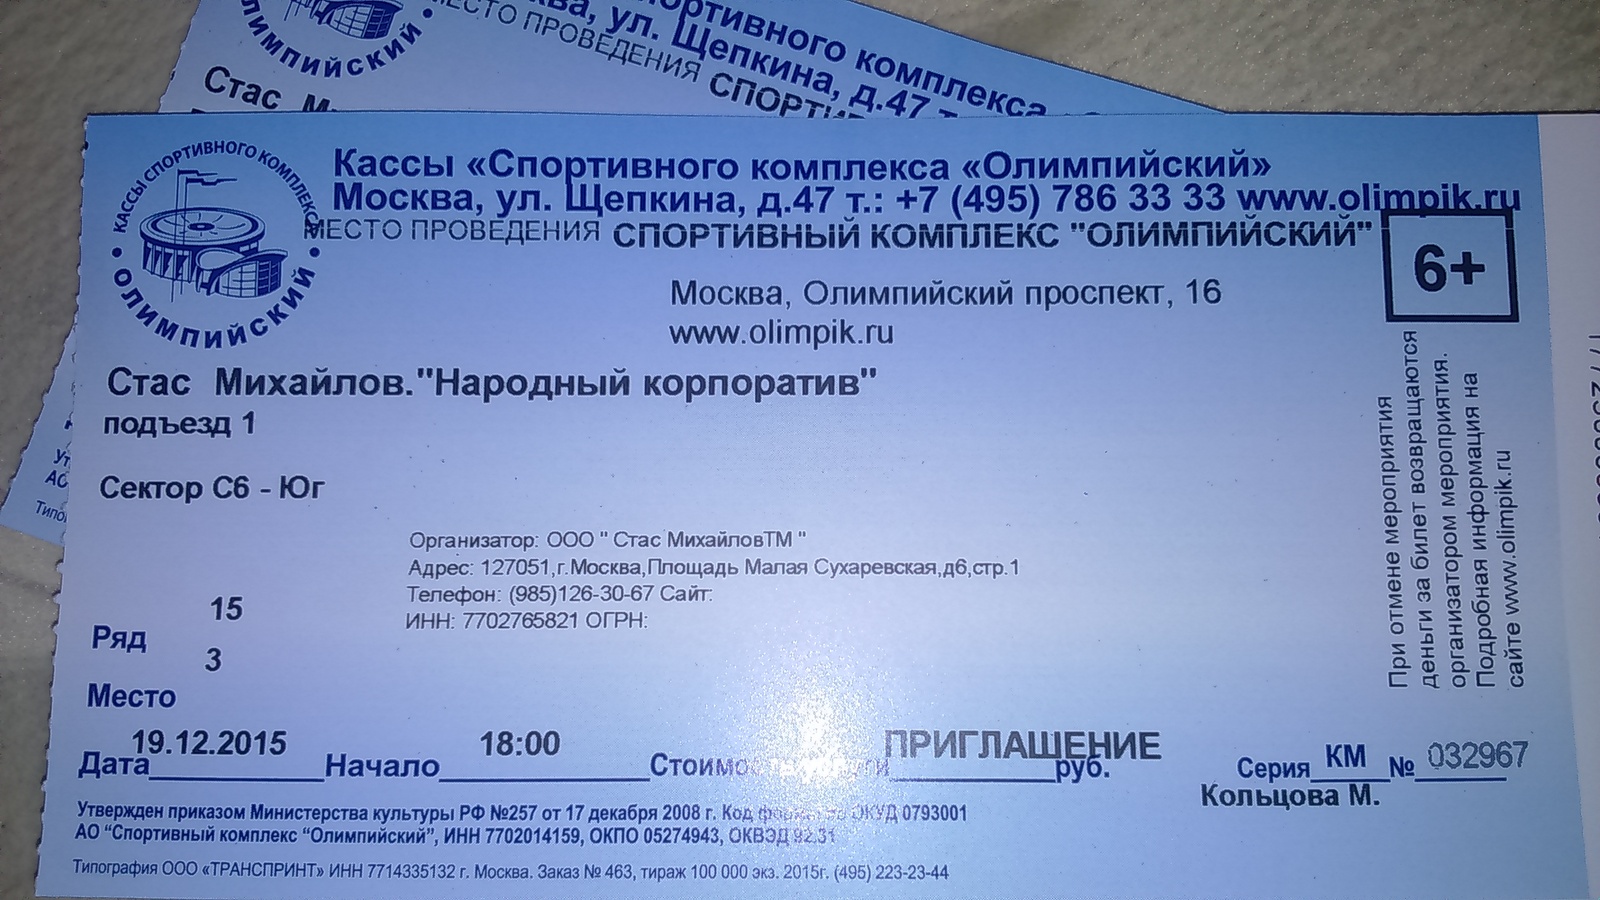 Билеты на концерт михайлова в москве. Билет на концерт Михайлова. Билет на концерт Стаса Михайлова. Сколько стоит билет на концерт Стаса Михайлова.